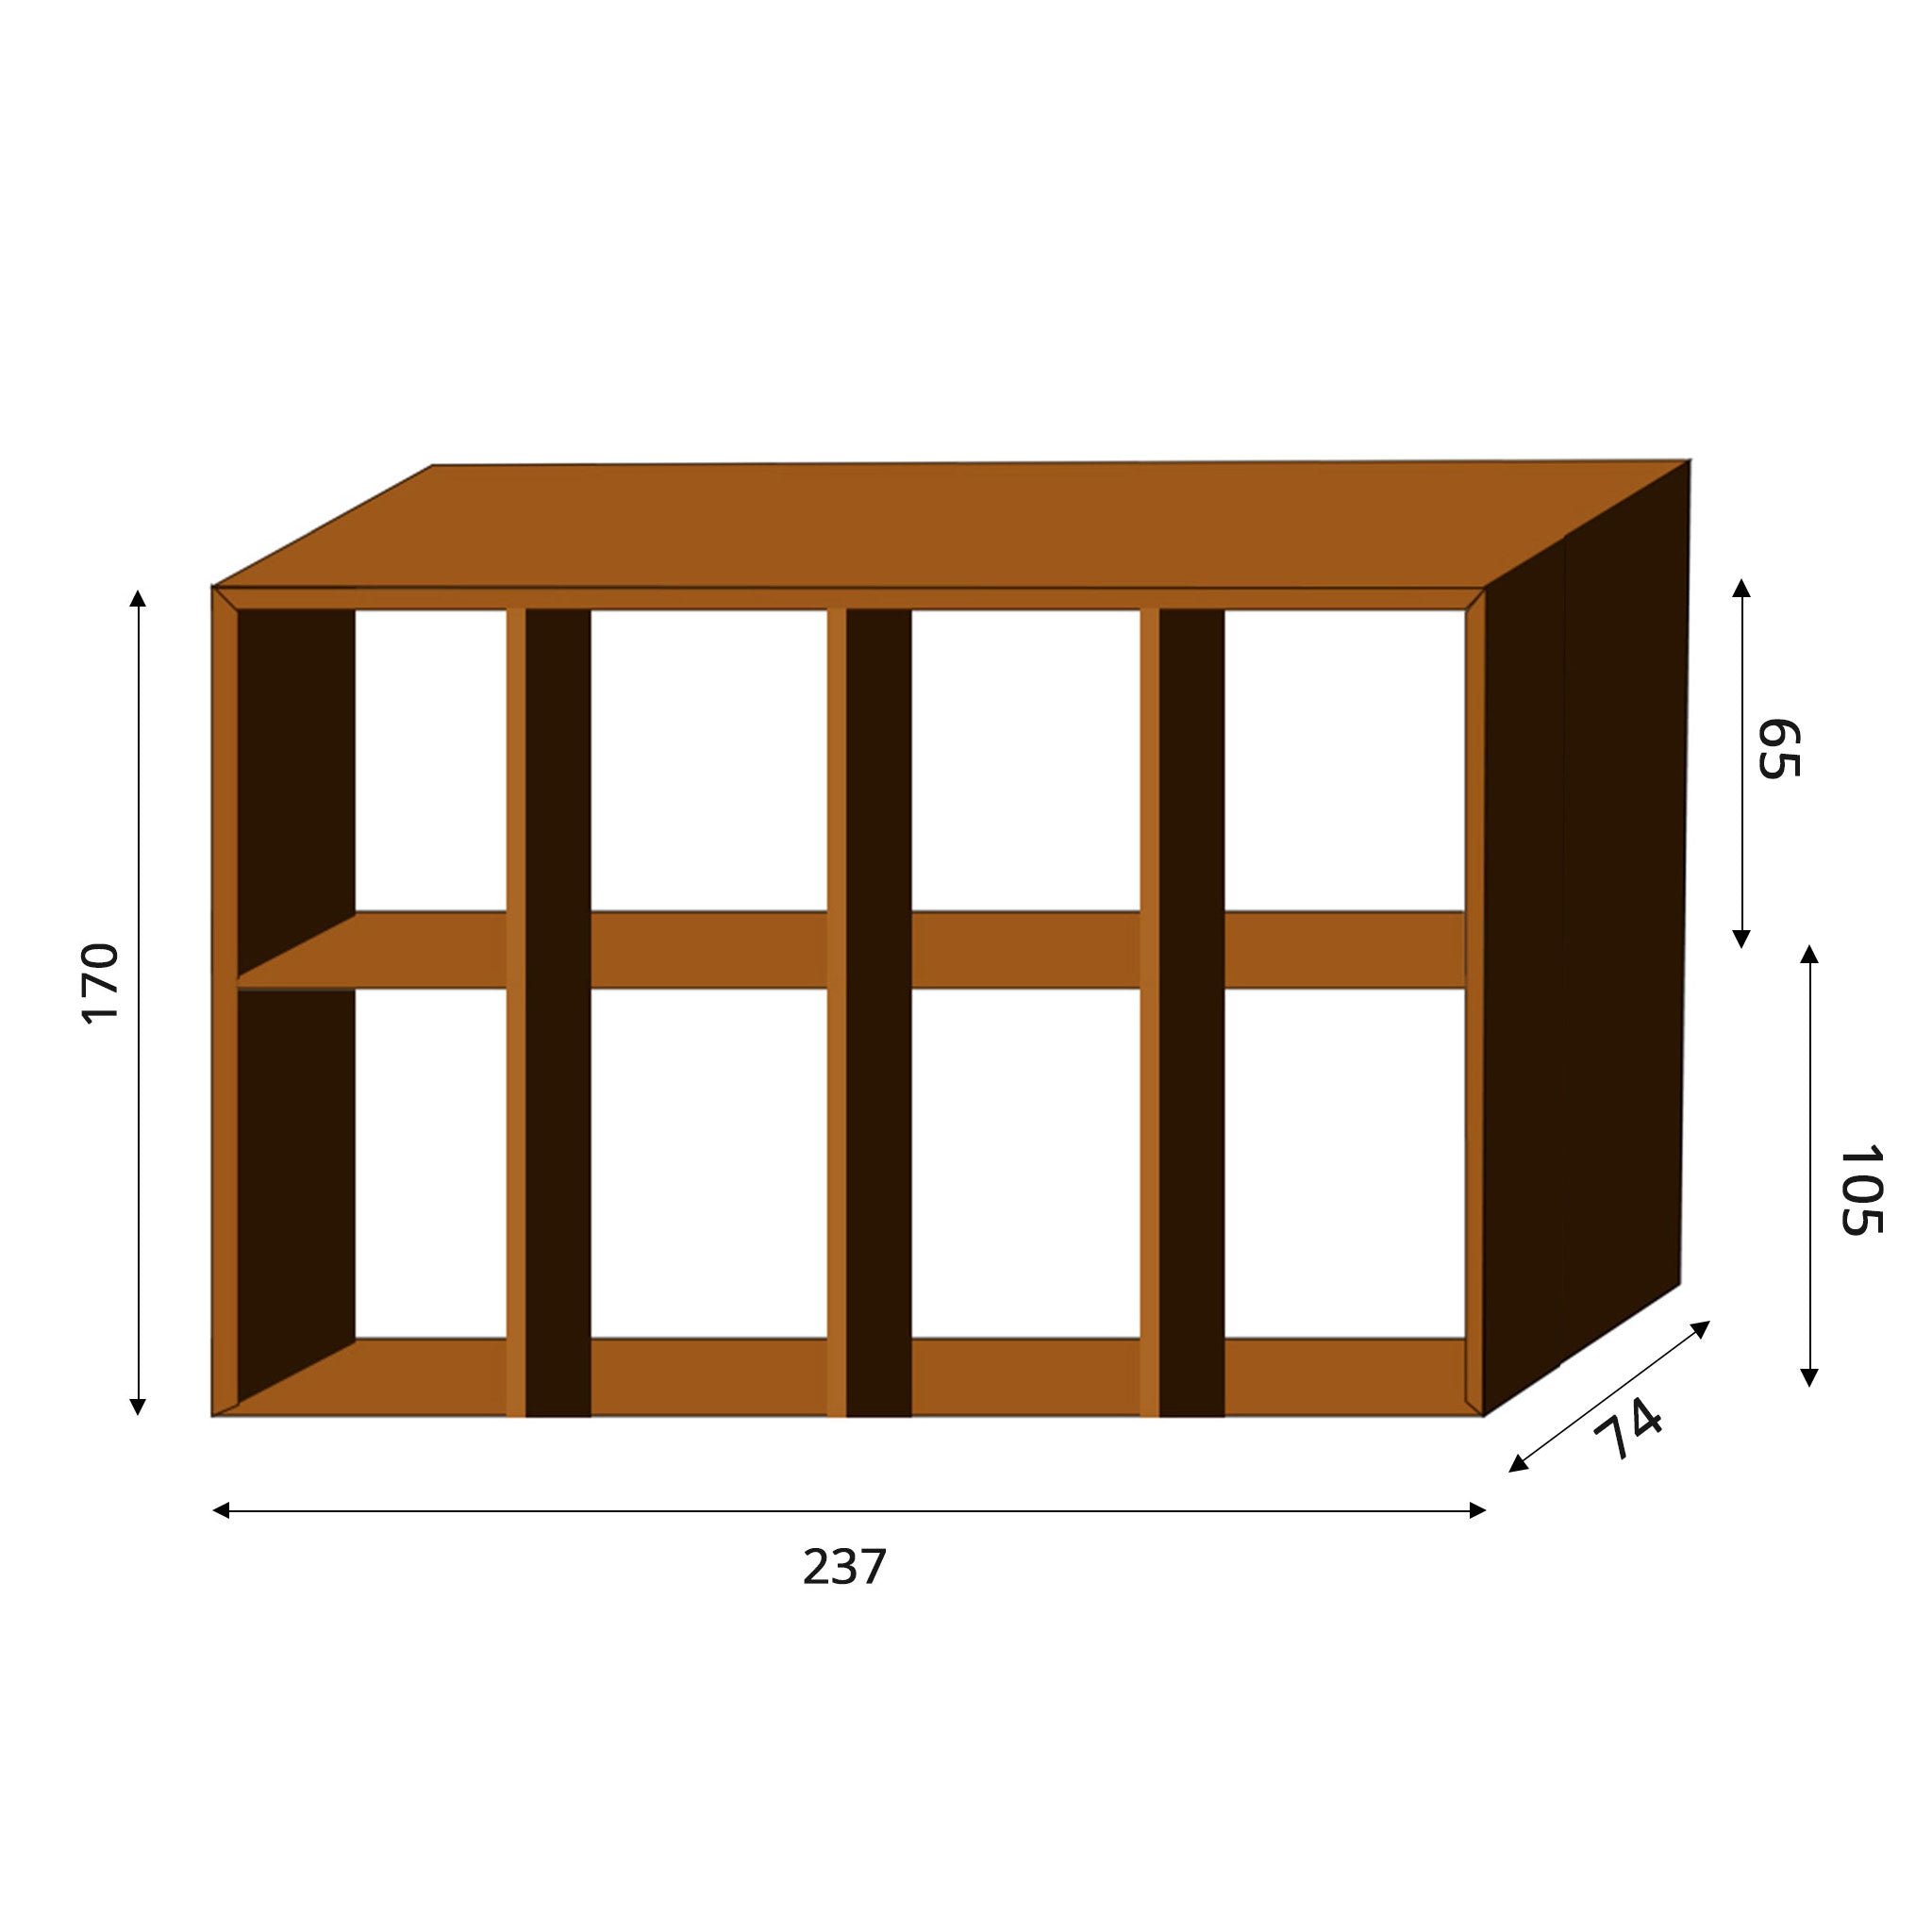 Corten Steel Modular Shelf WALL-XL
(size 237x74x170 cm, consists of 4 modules)